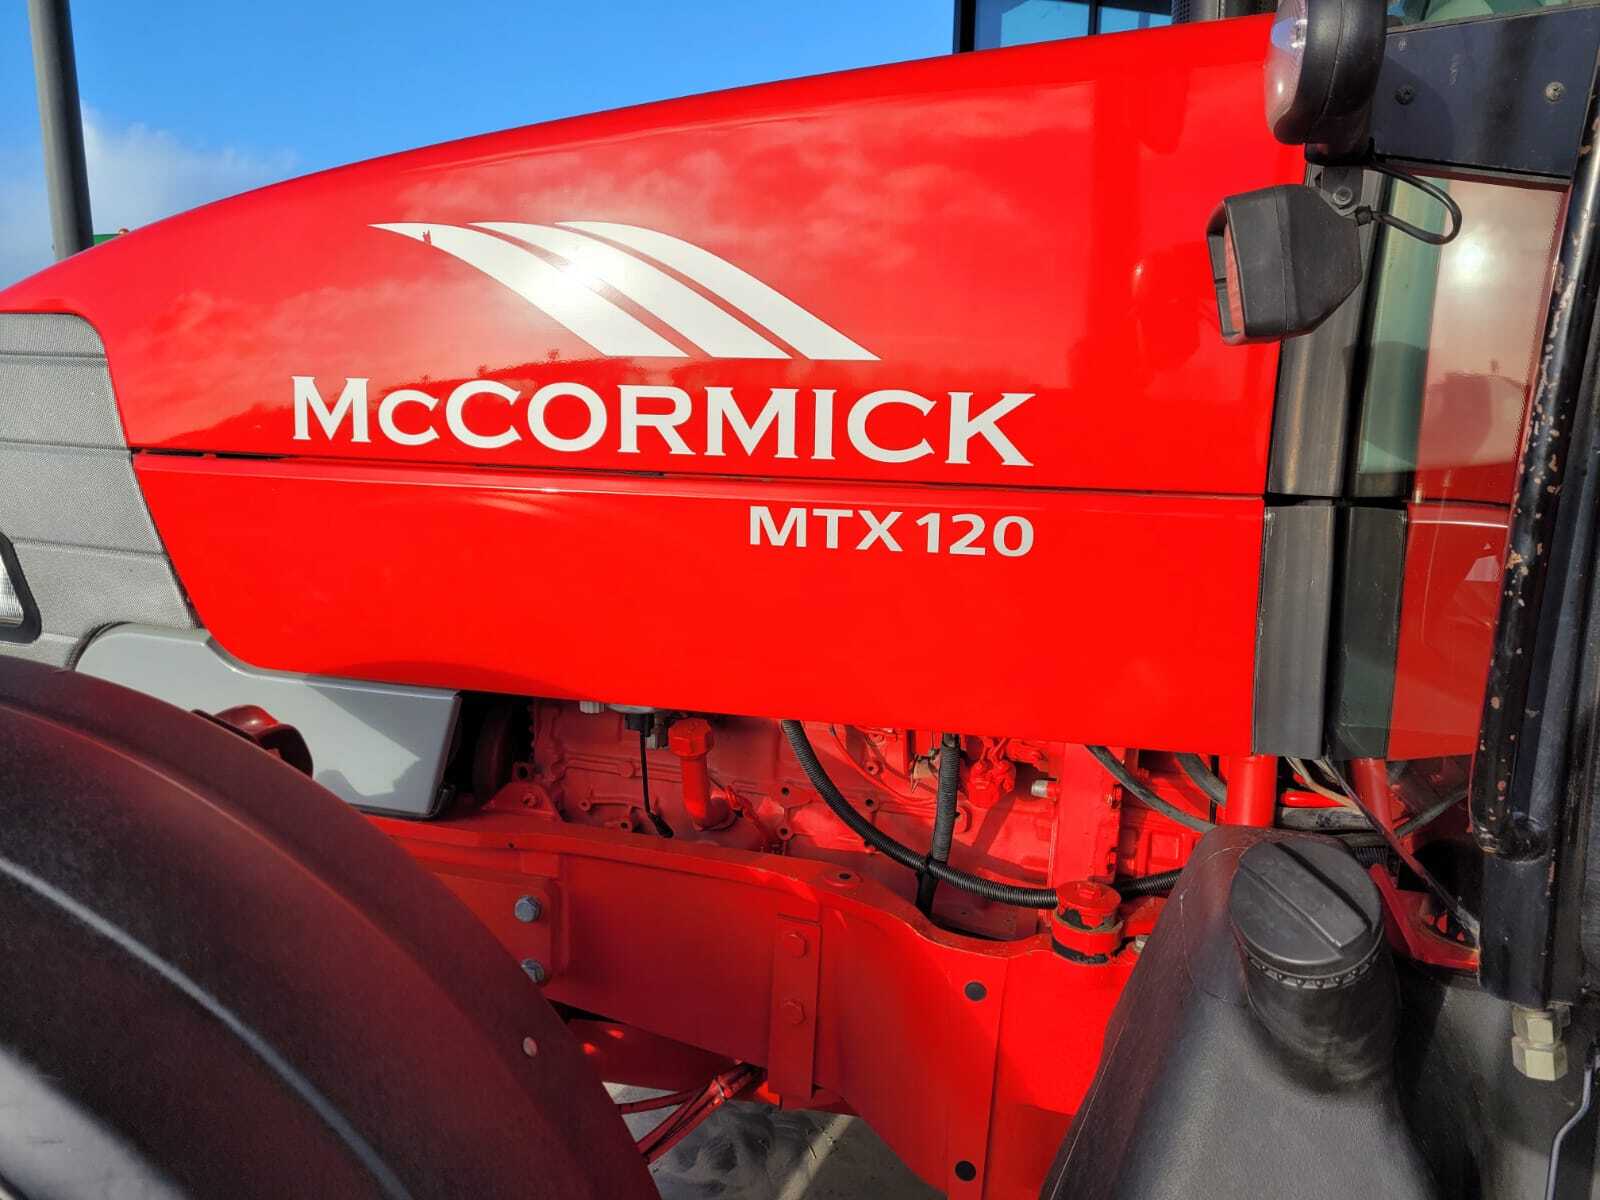 MC CORMICK MTX 120